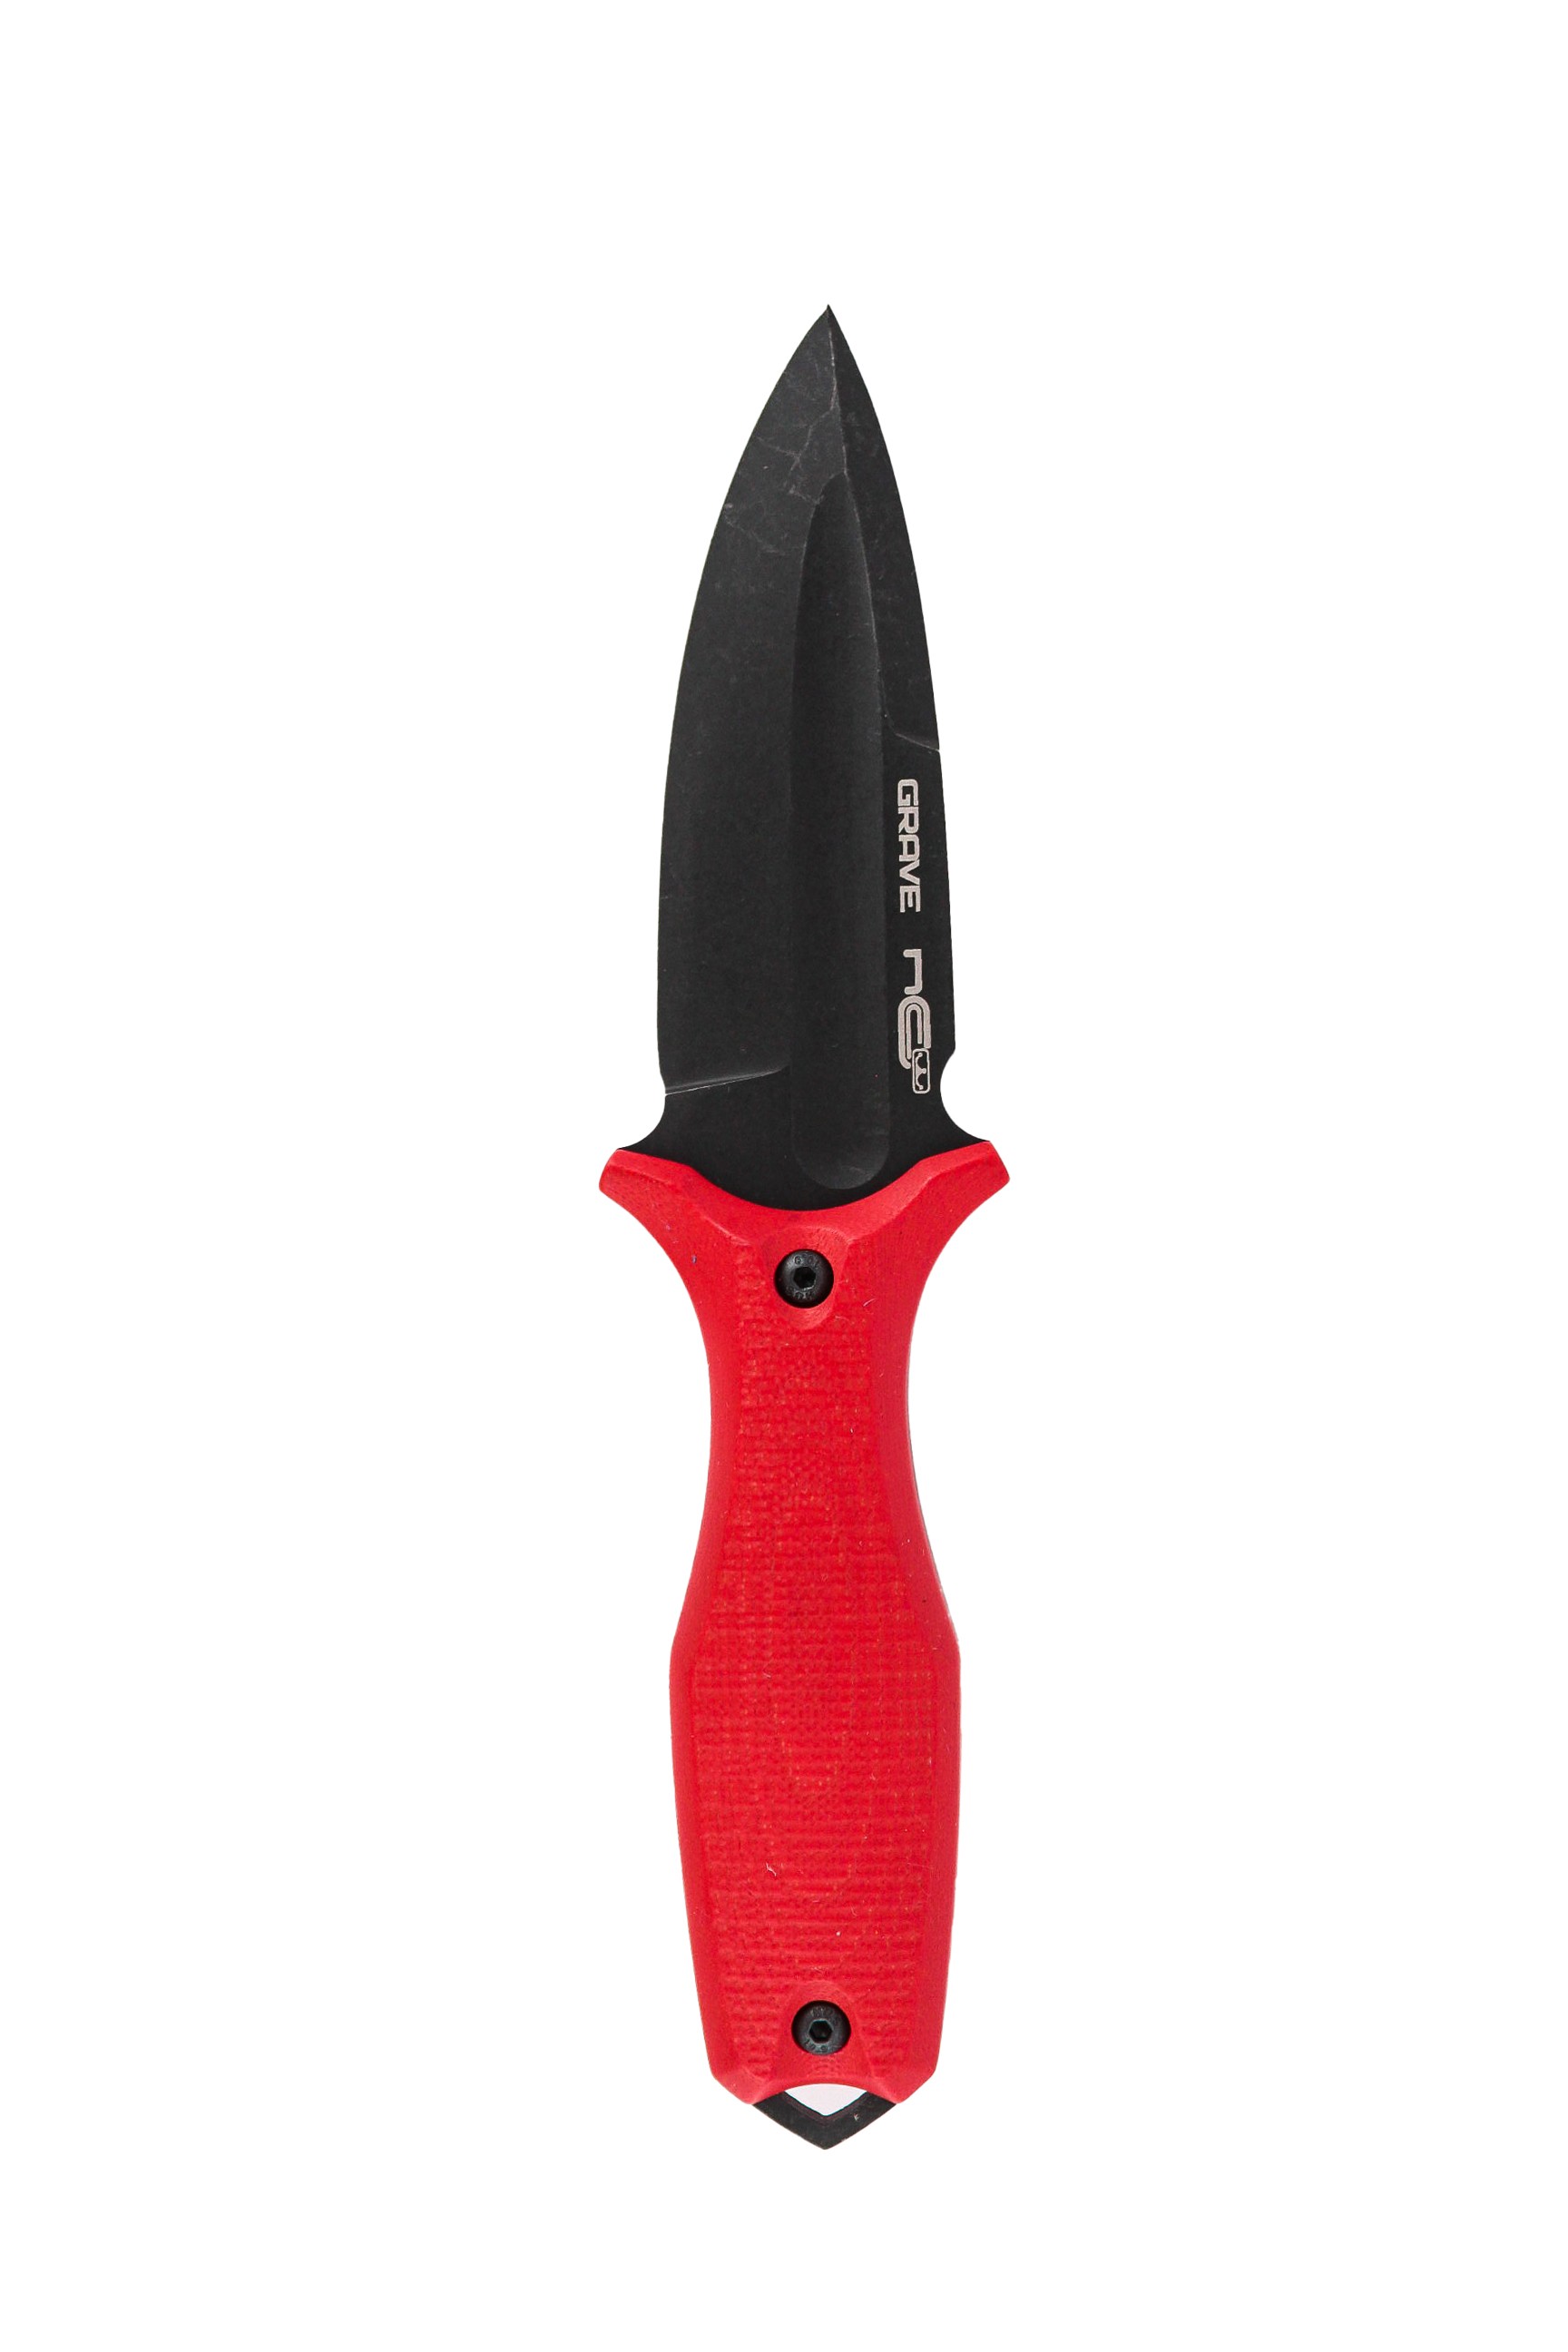 Нож NC Custom Grave limited G10 red - фото 1